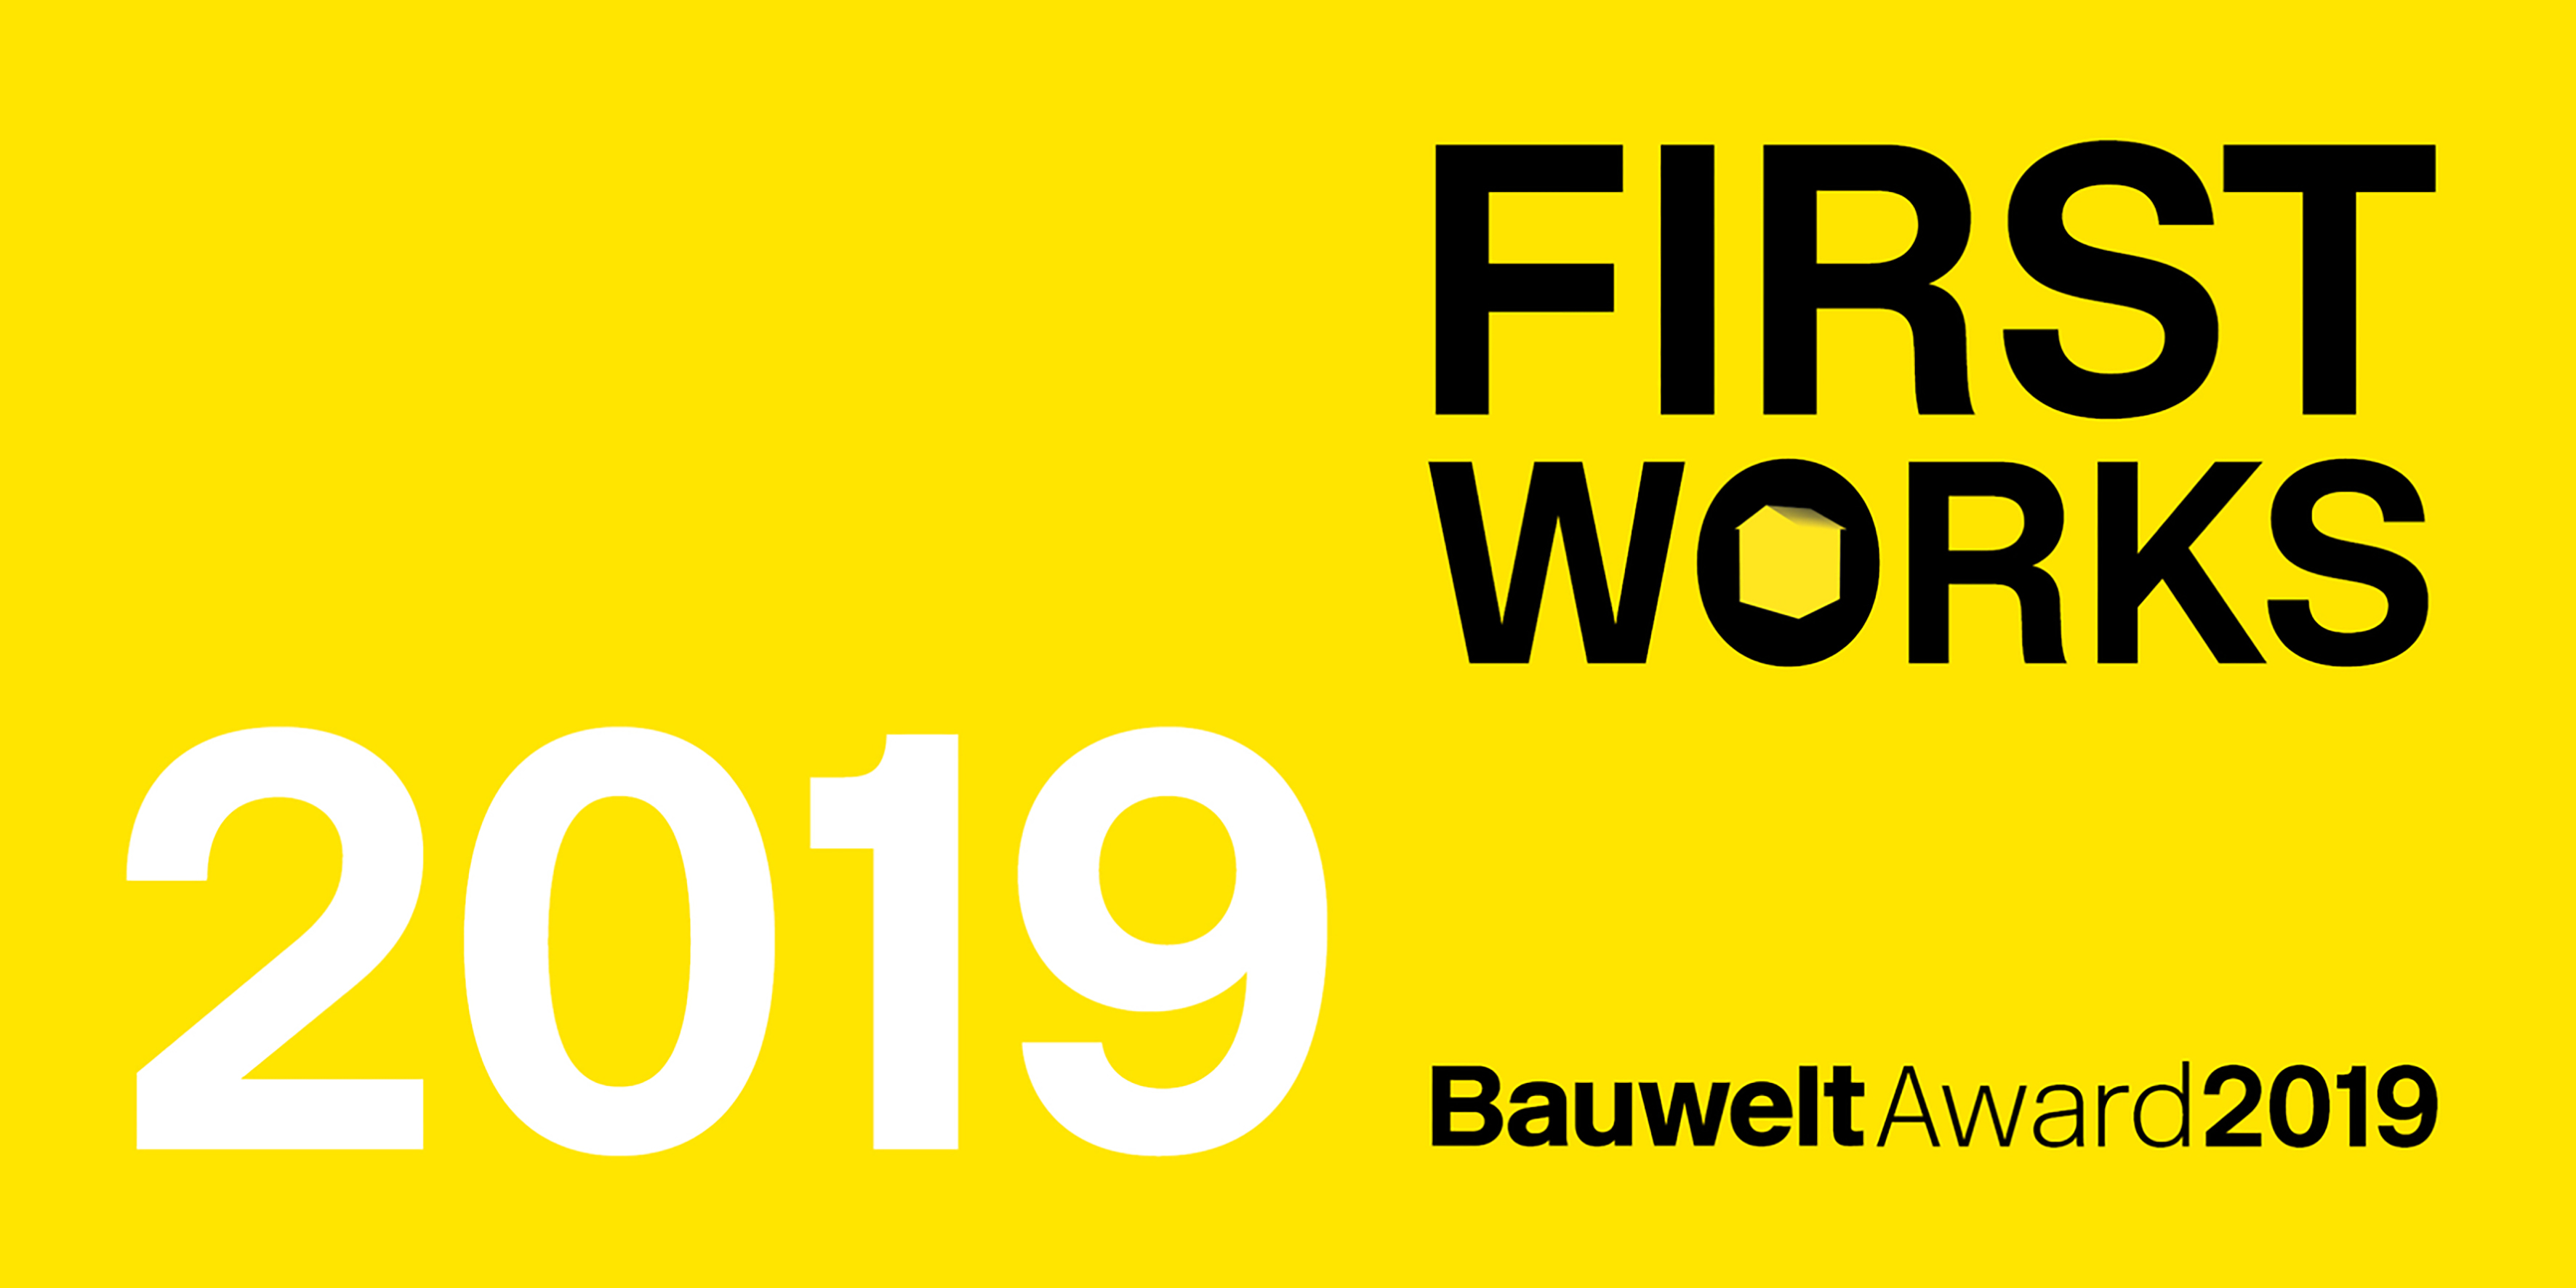 BAUWELT AWARD 2019